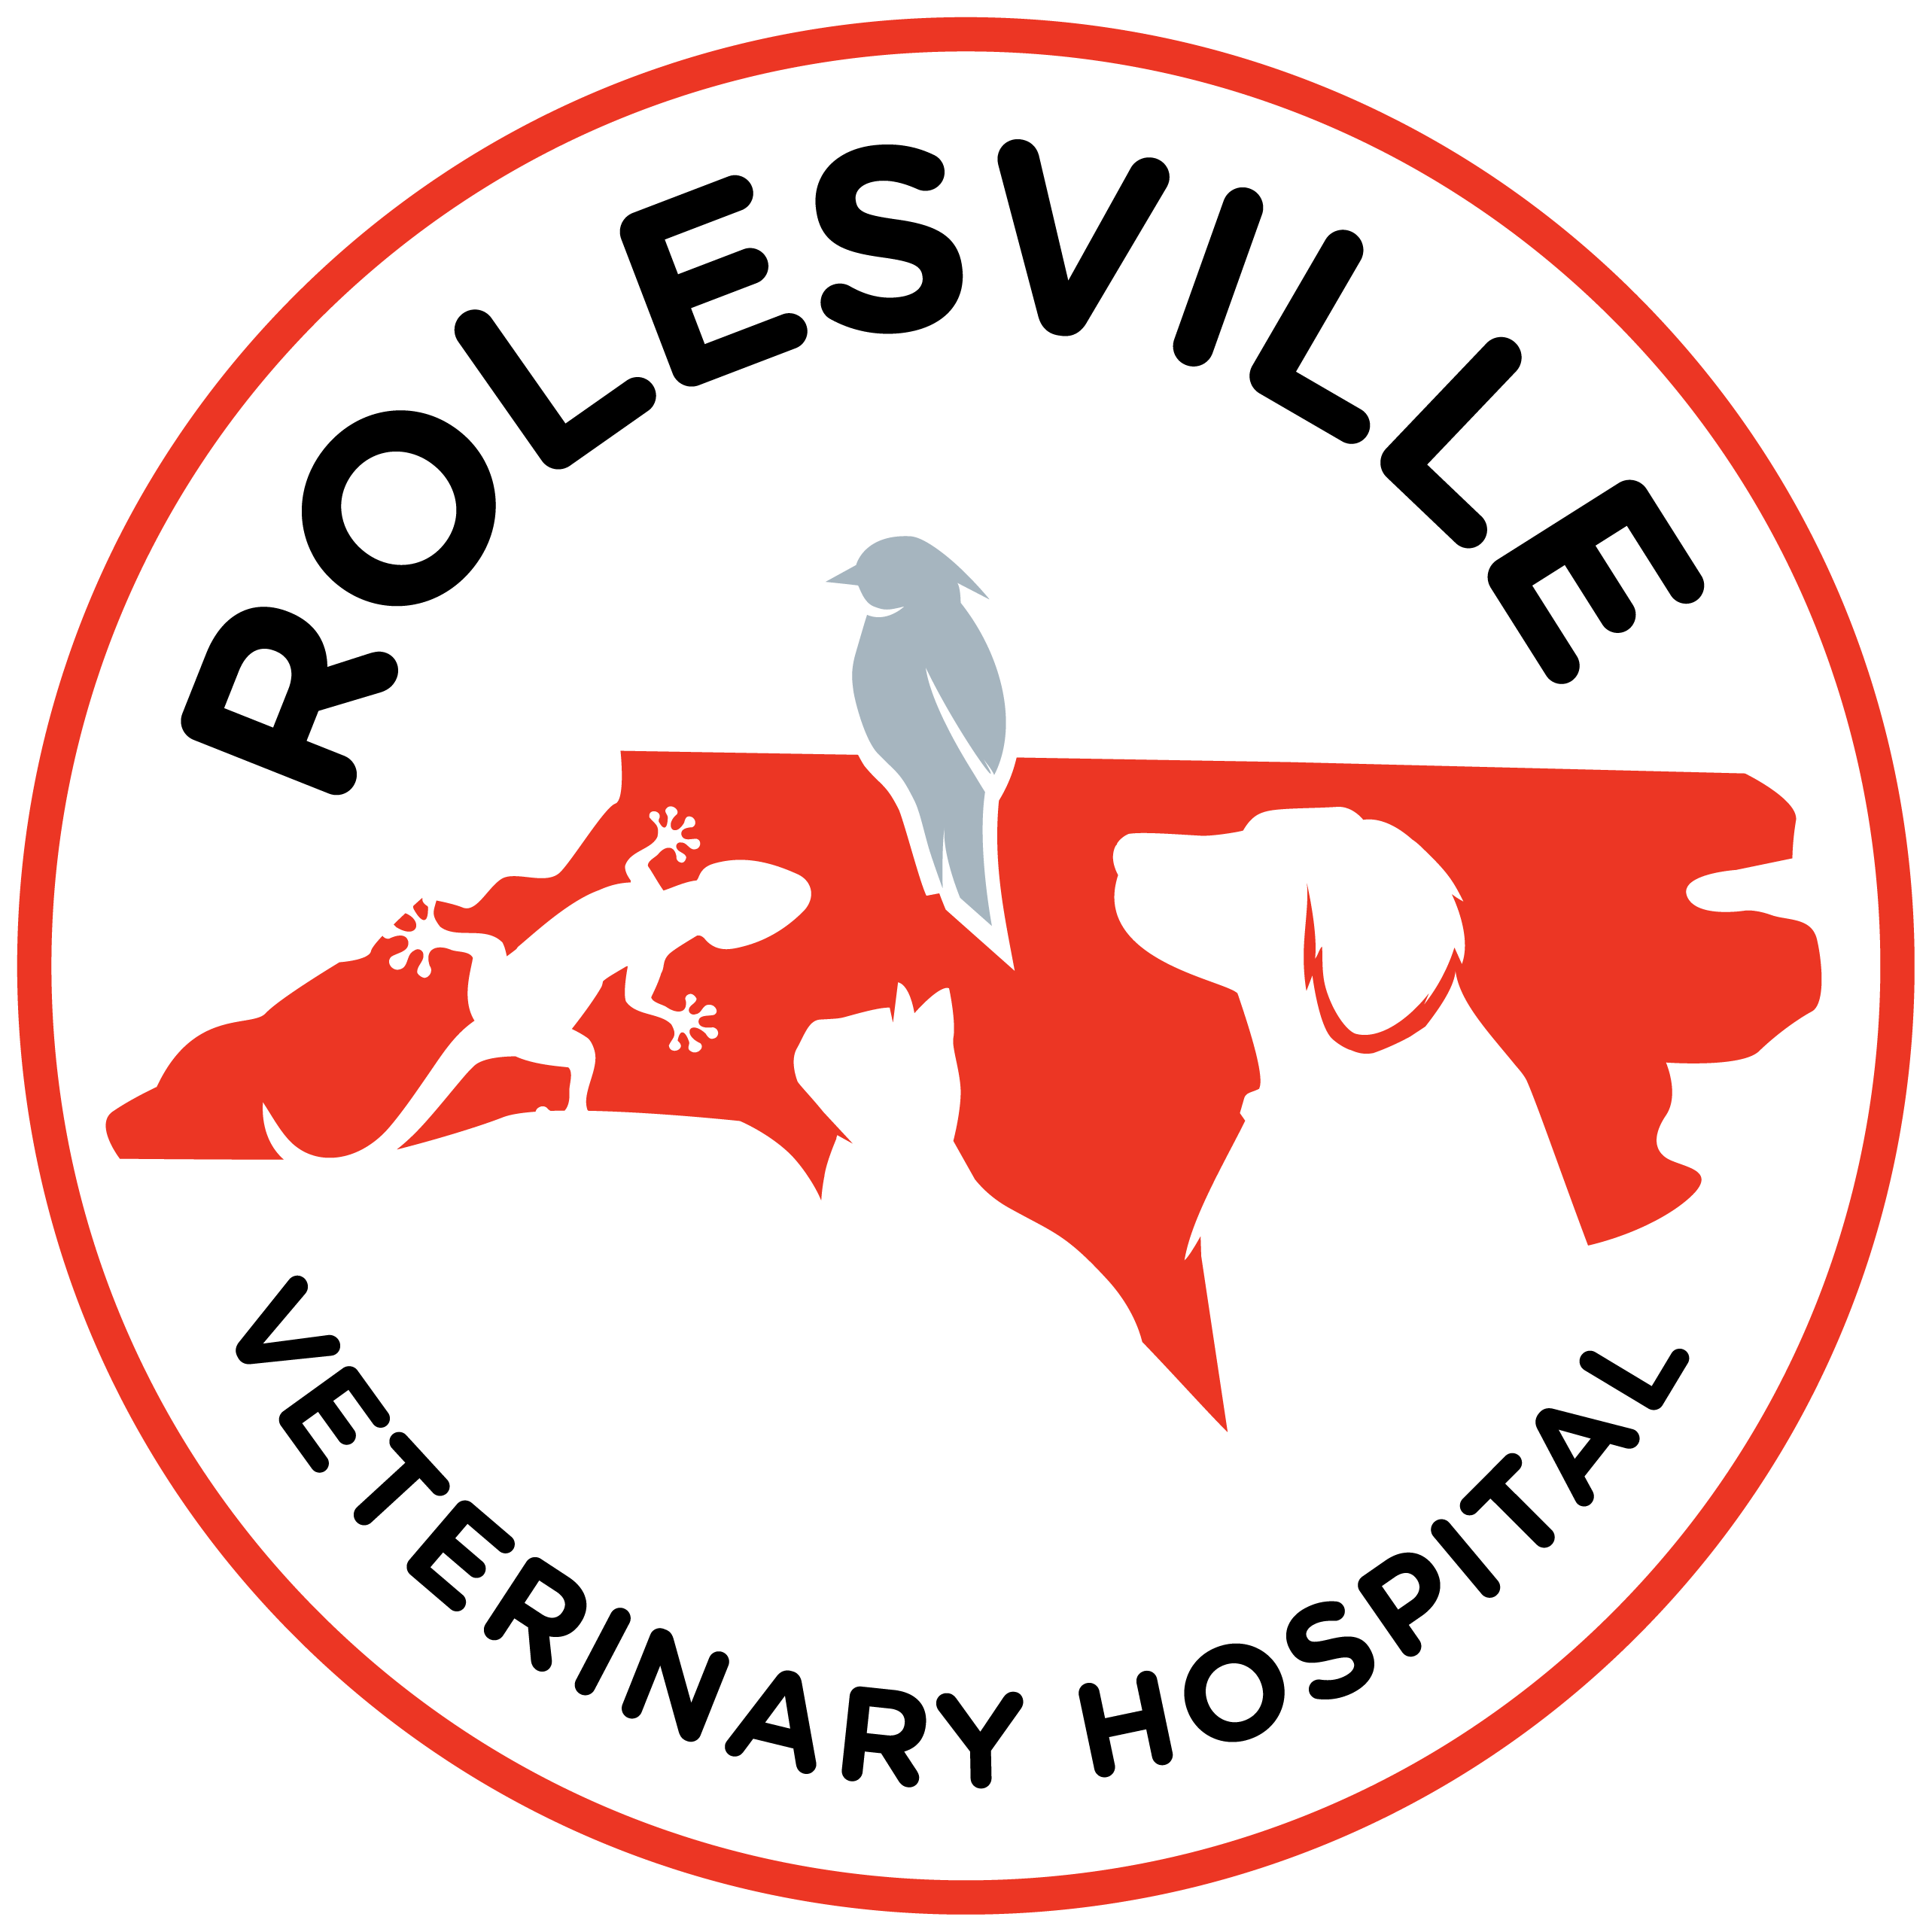 Rolesville Veterinary Hospital